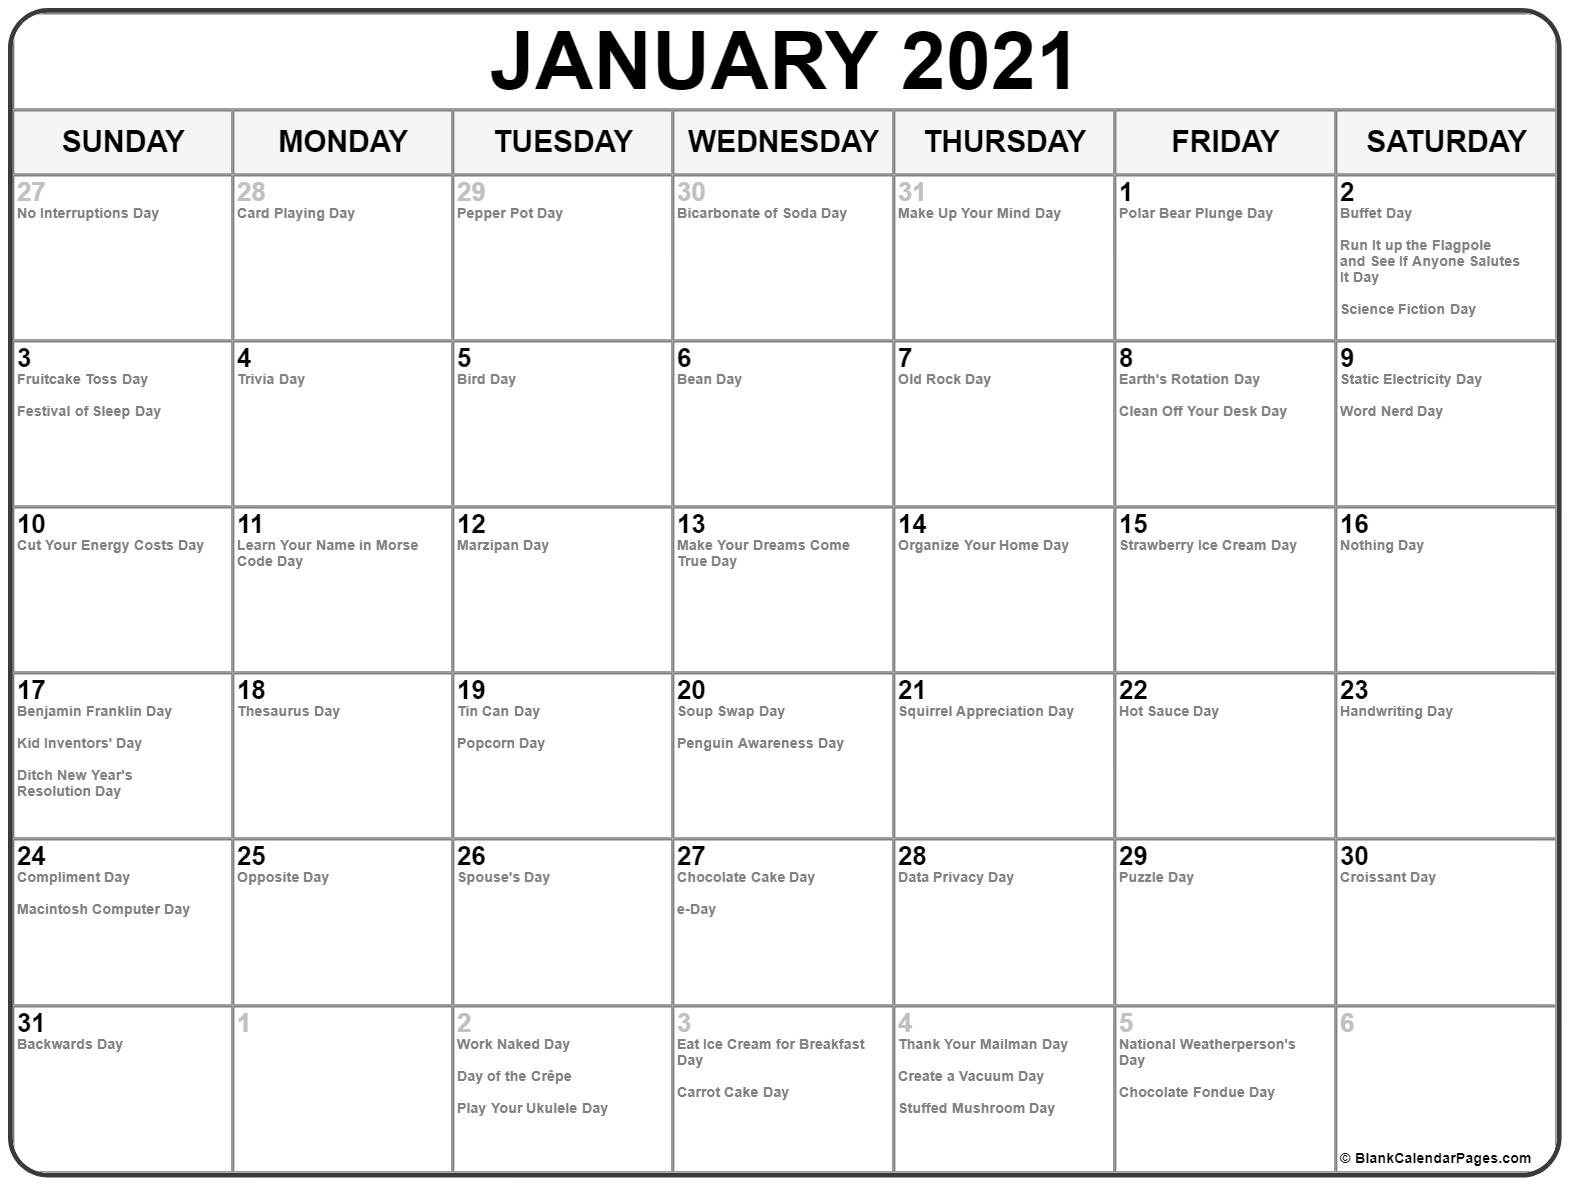 january 2021 calendar with holidays